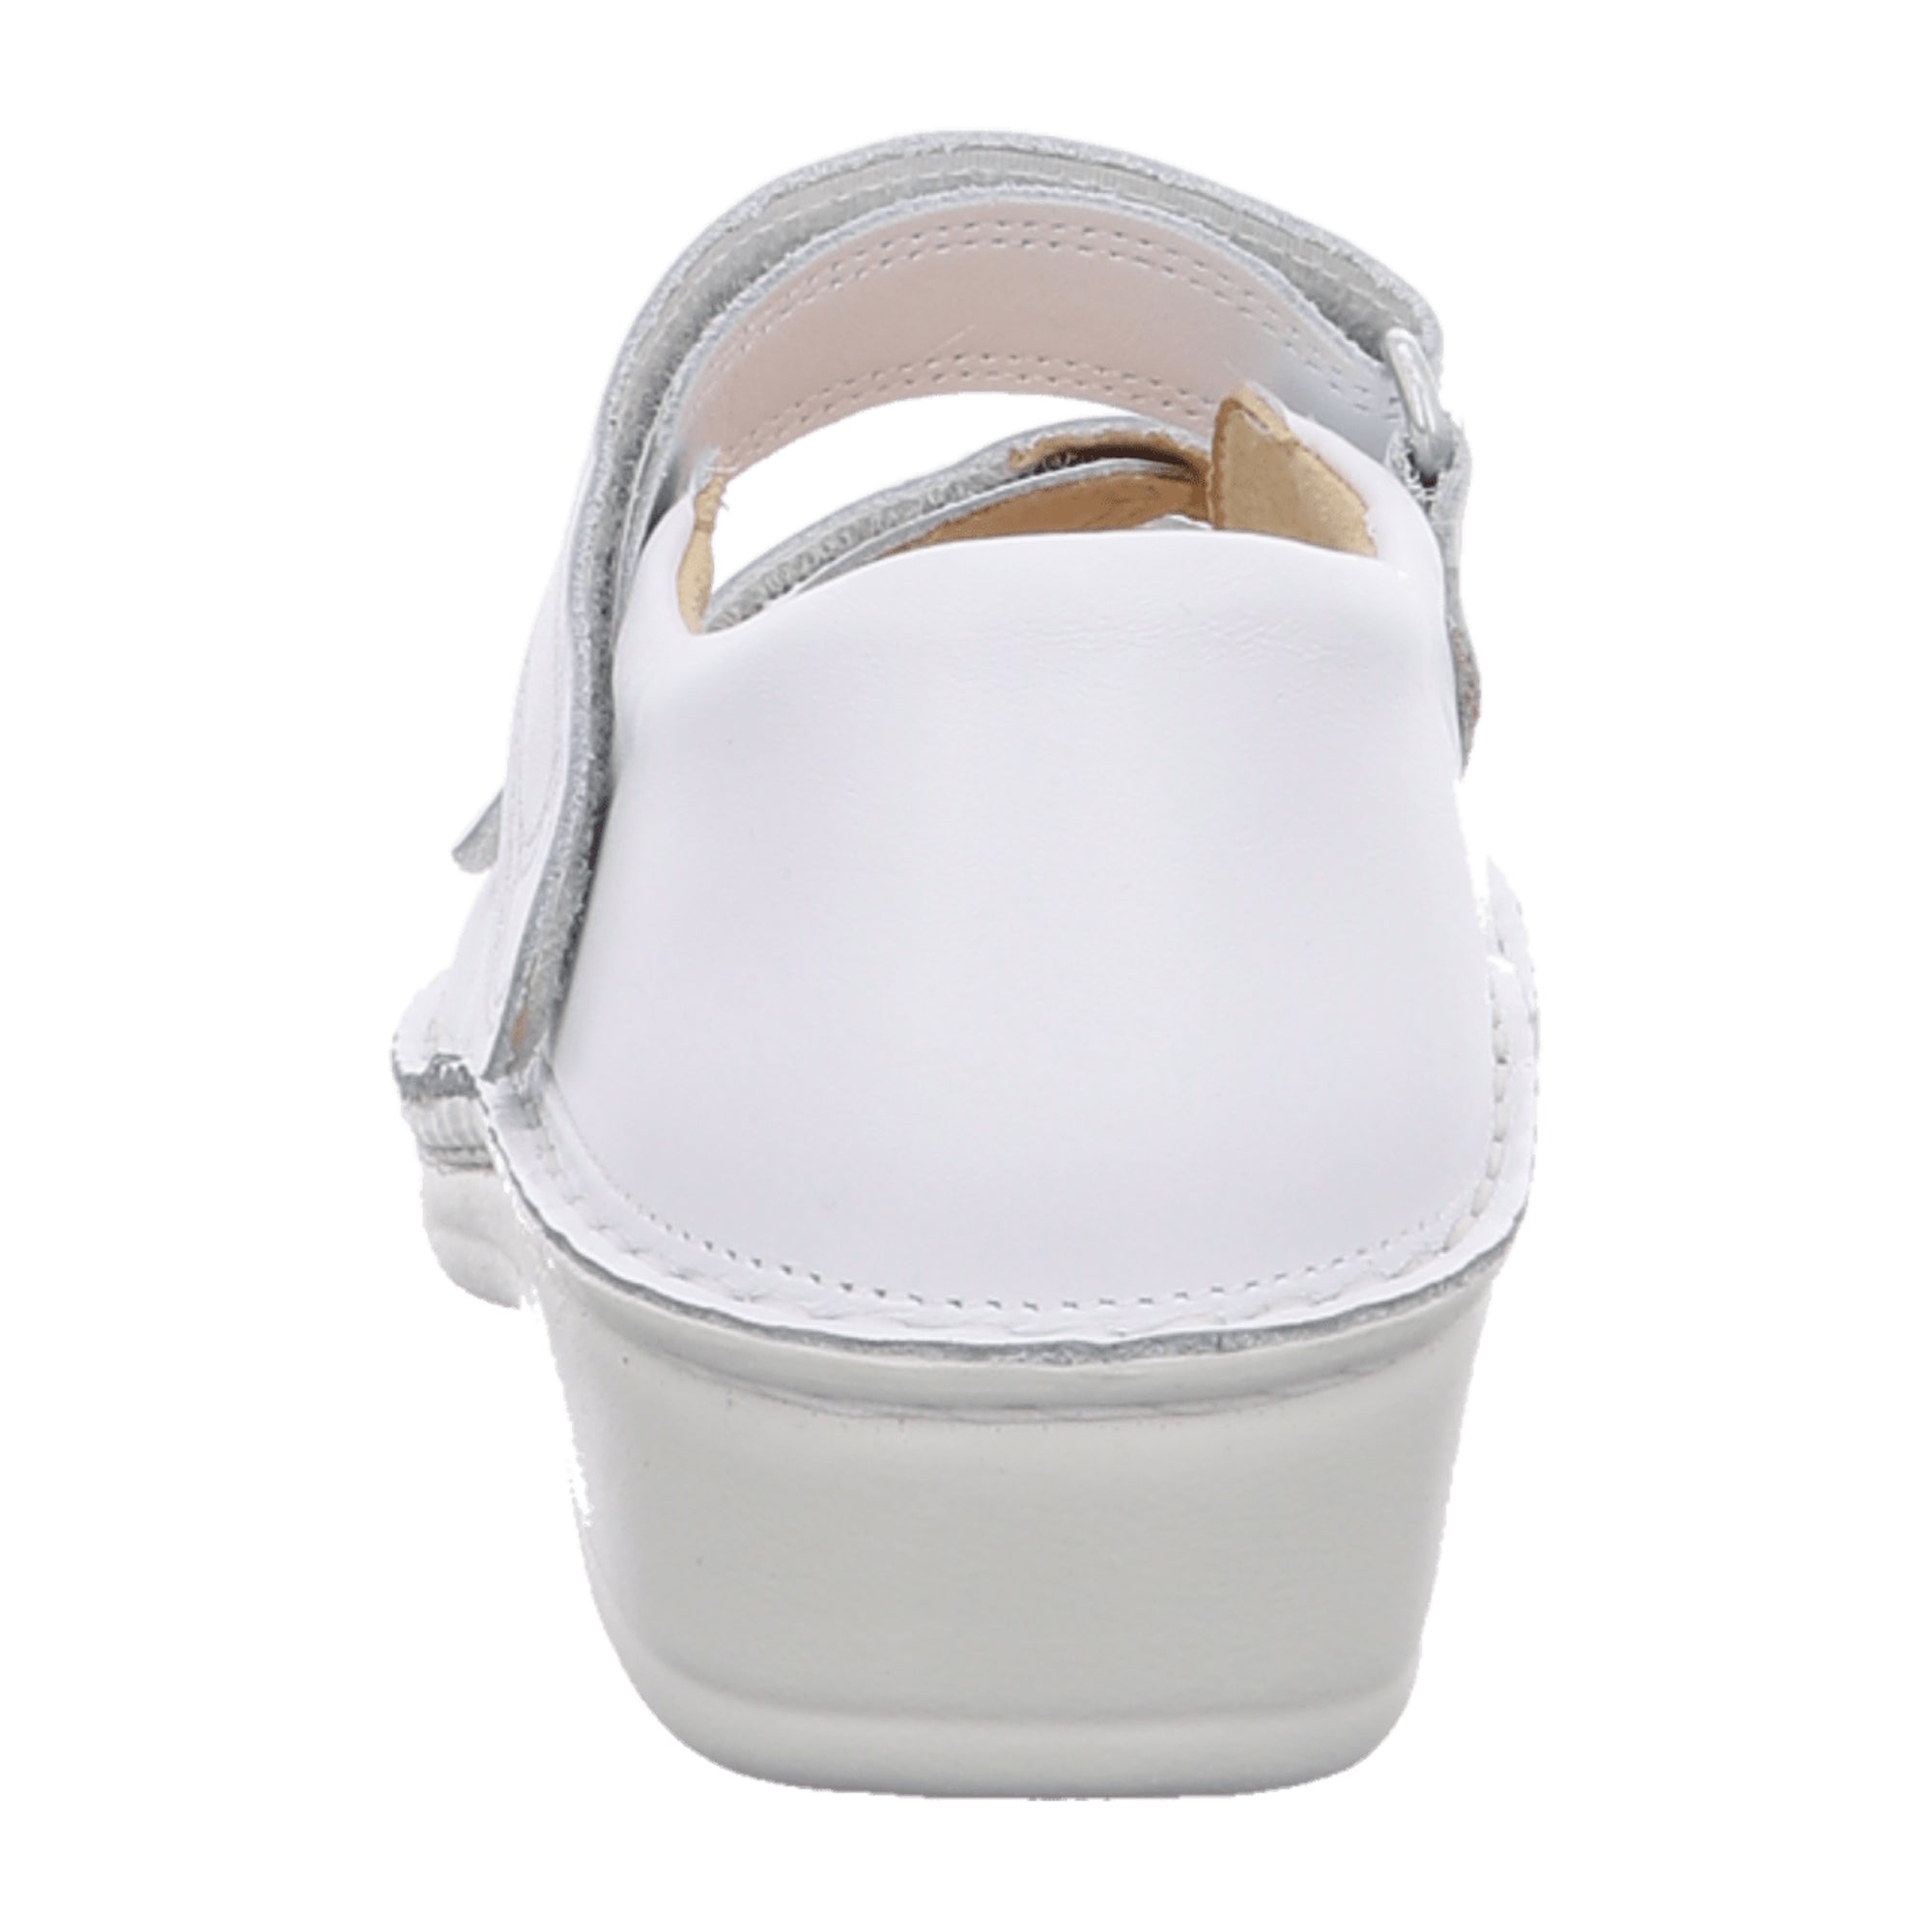 Finn Comfort Usedom White Sandals for Women - Stylish & Durable